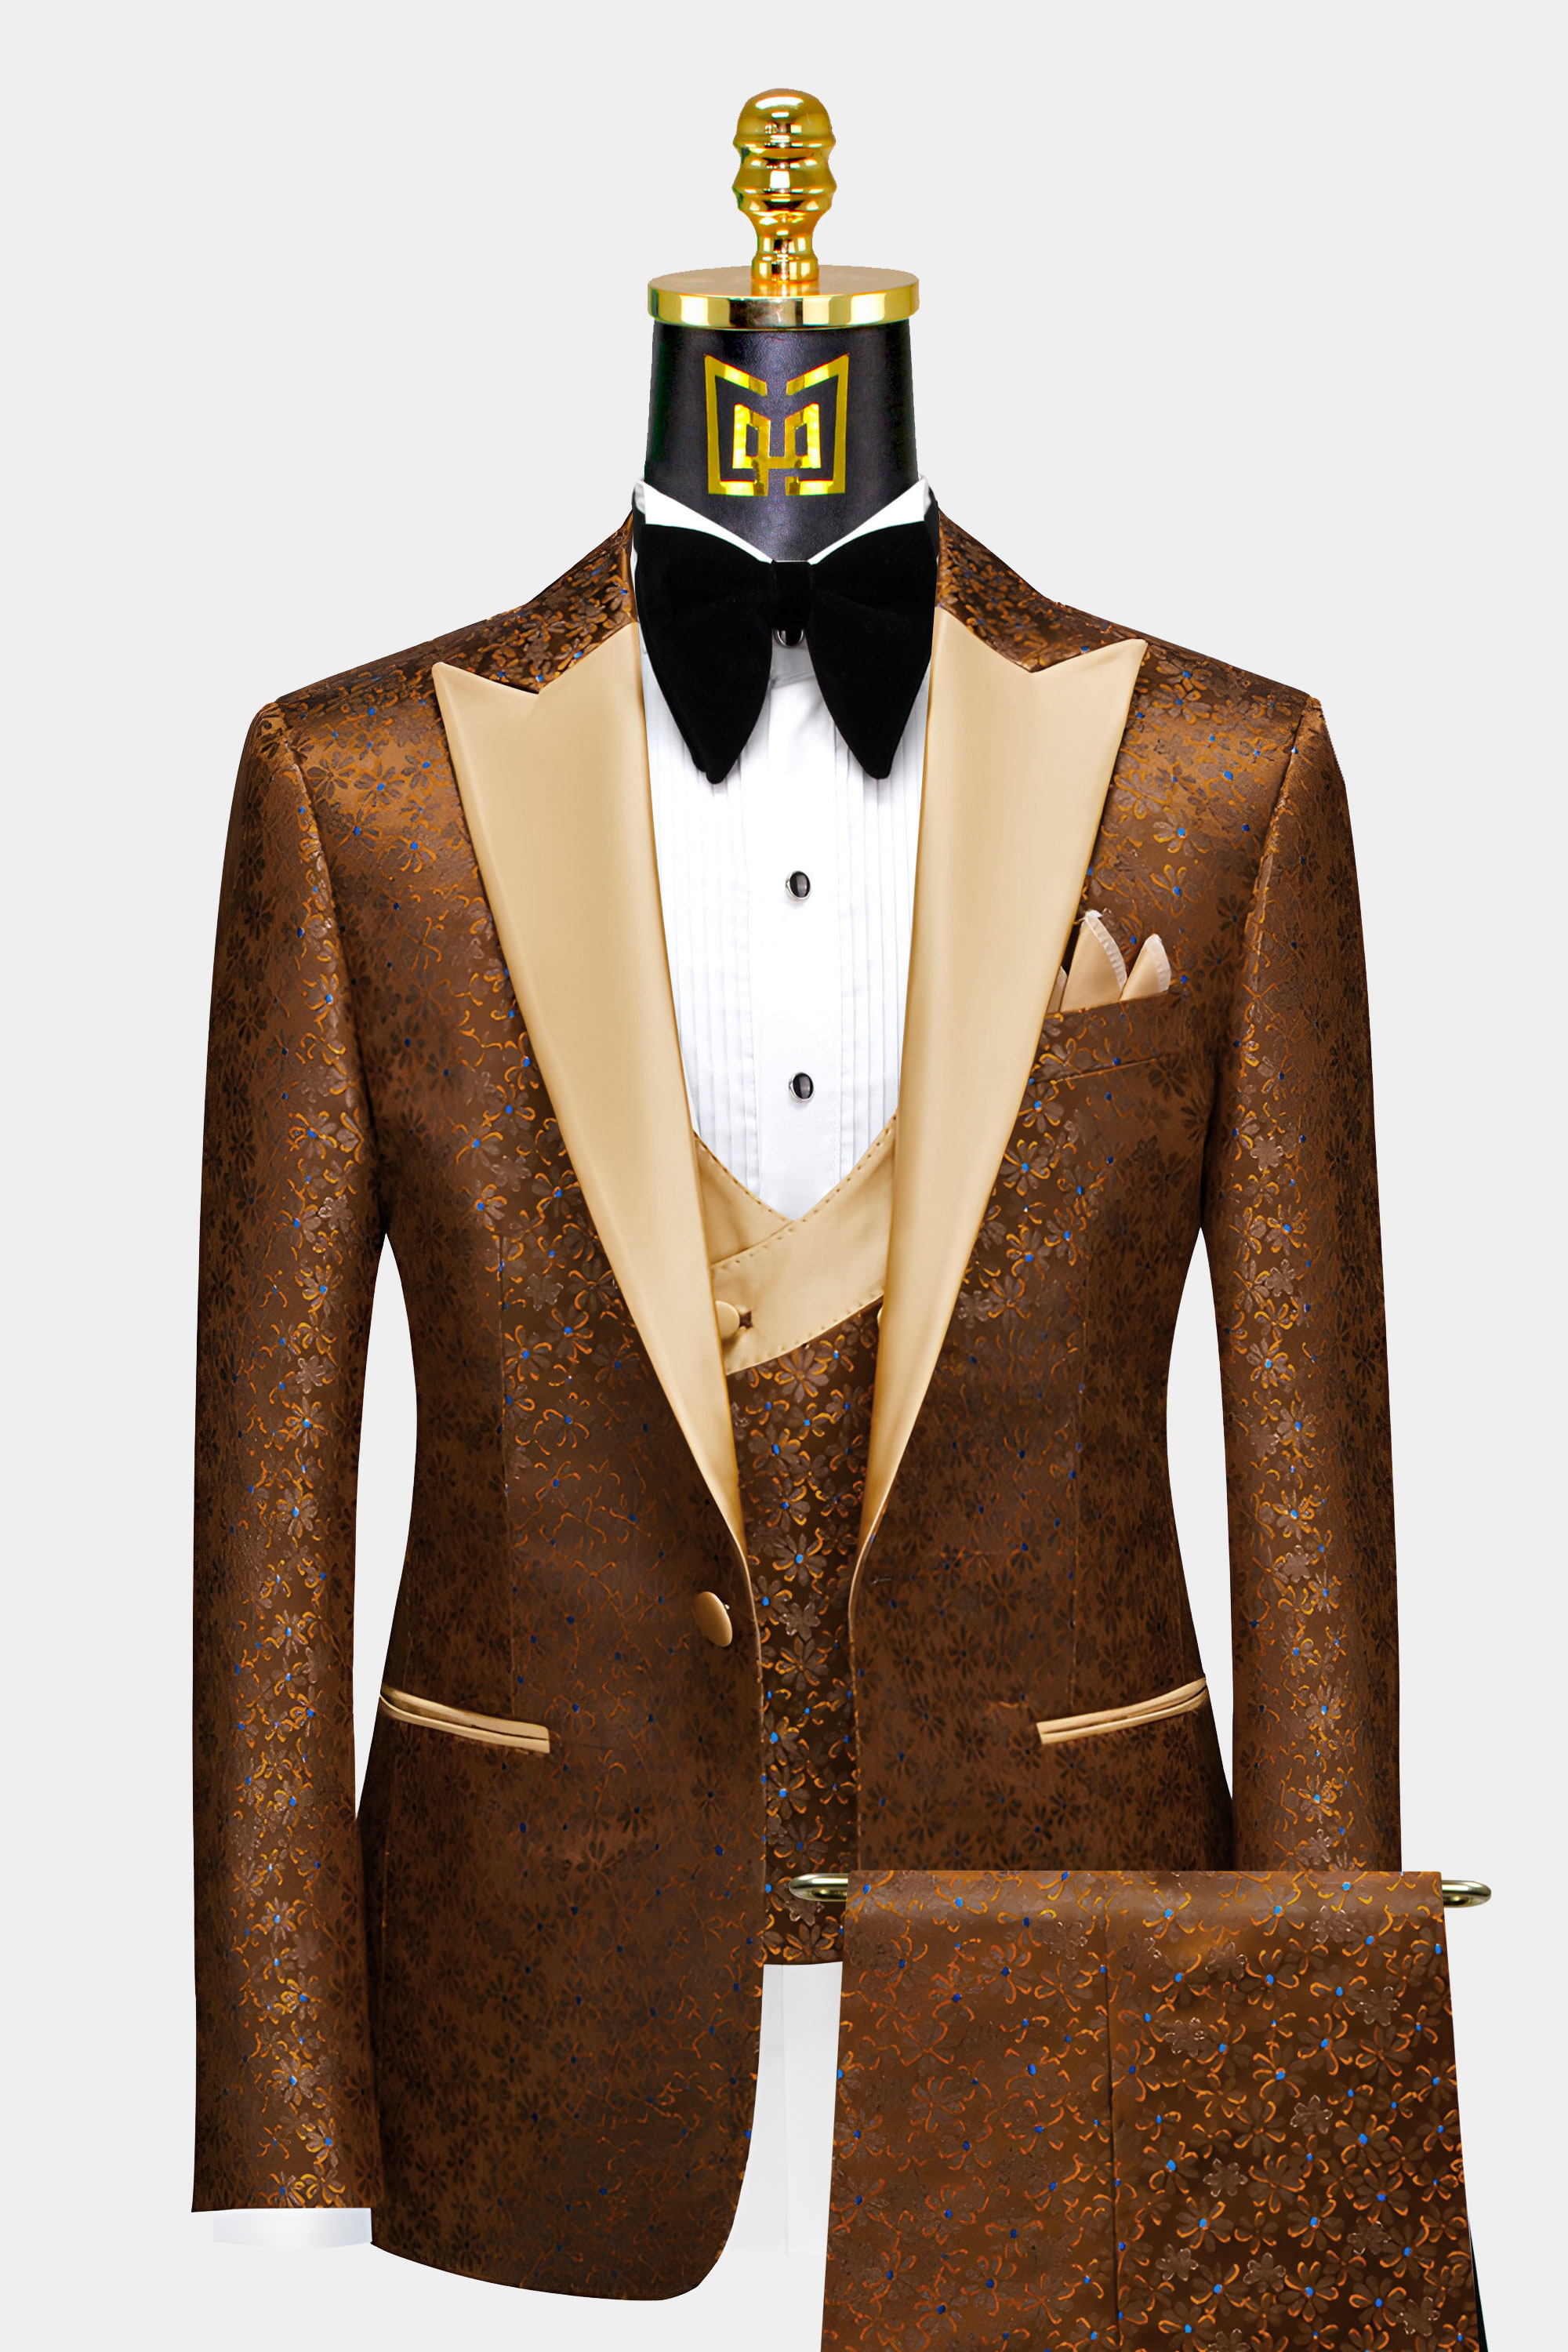 Burn Ornage Tuxedo Suit Wedding Groom Attire from Gentlemansguru.com